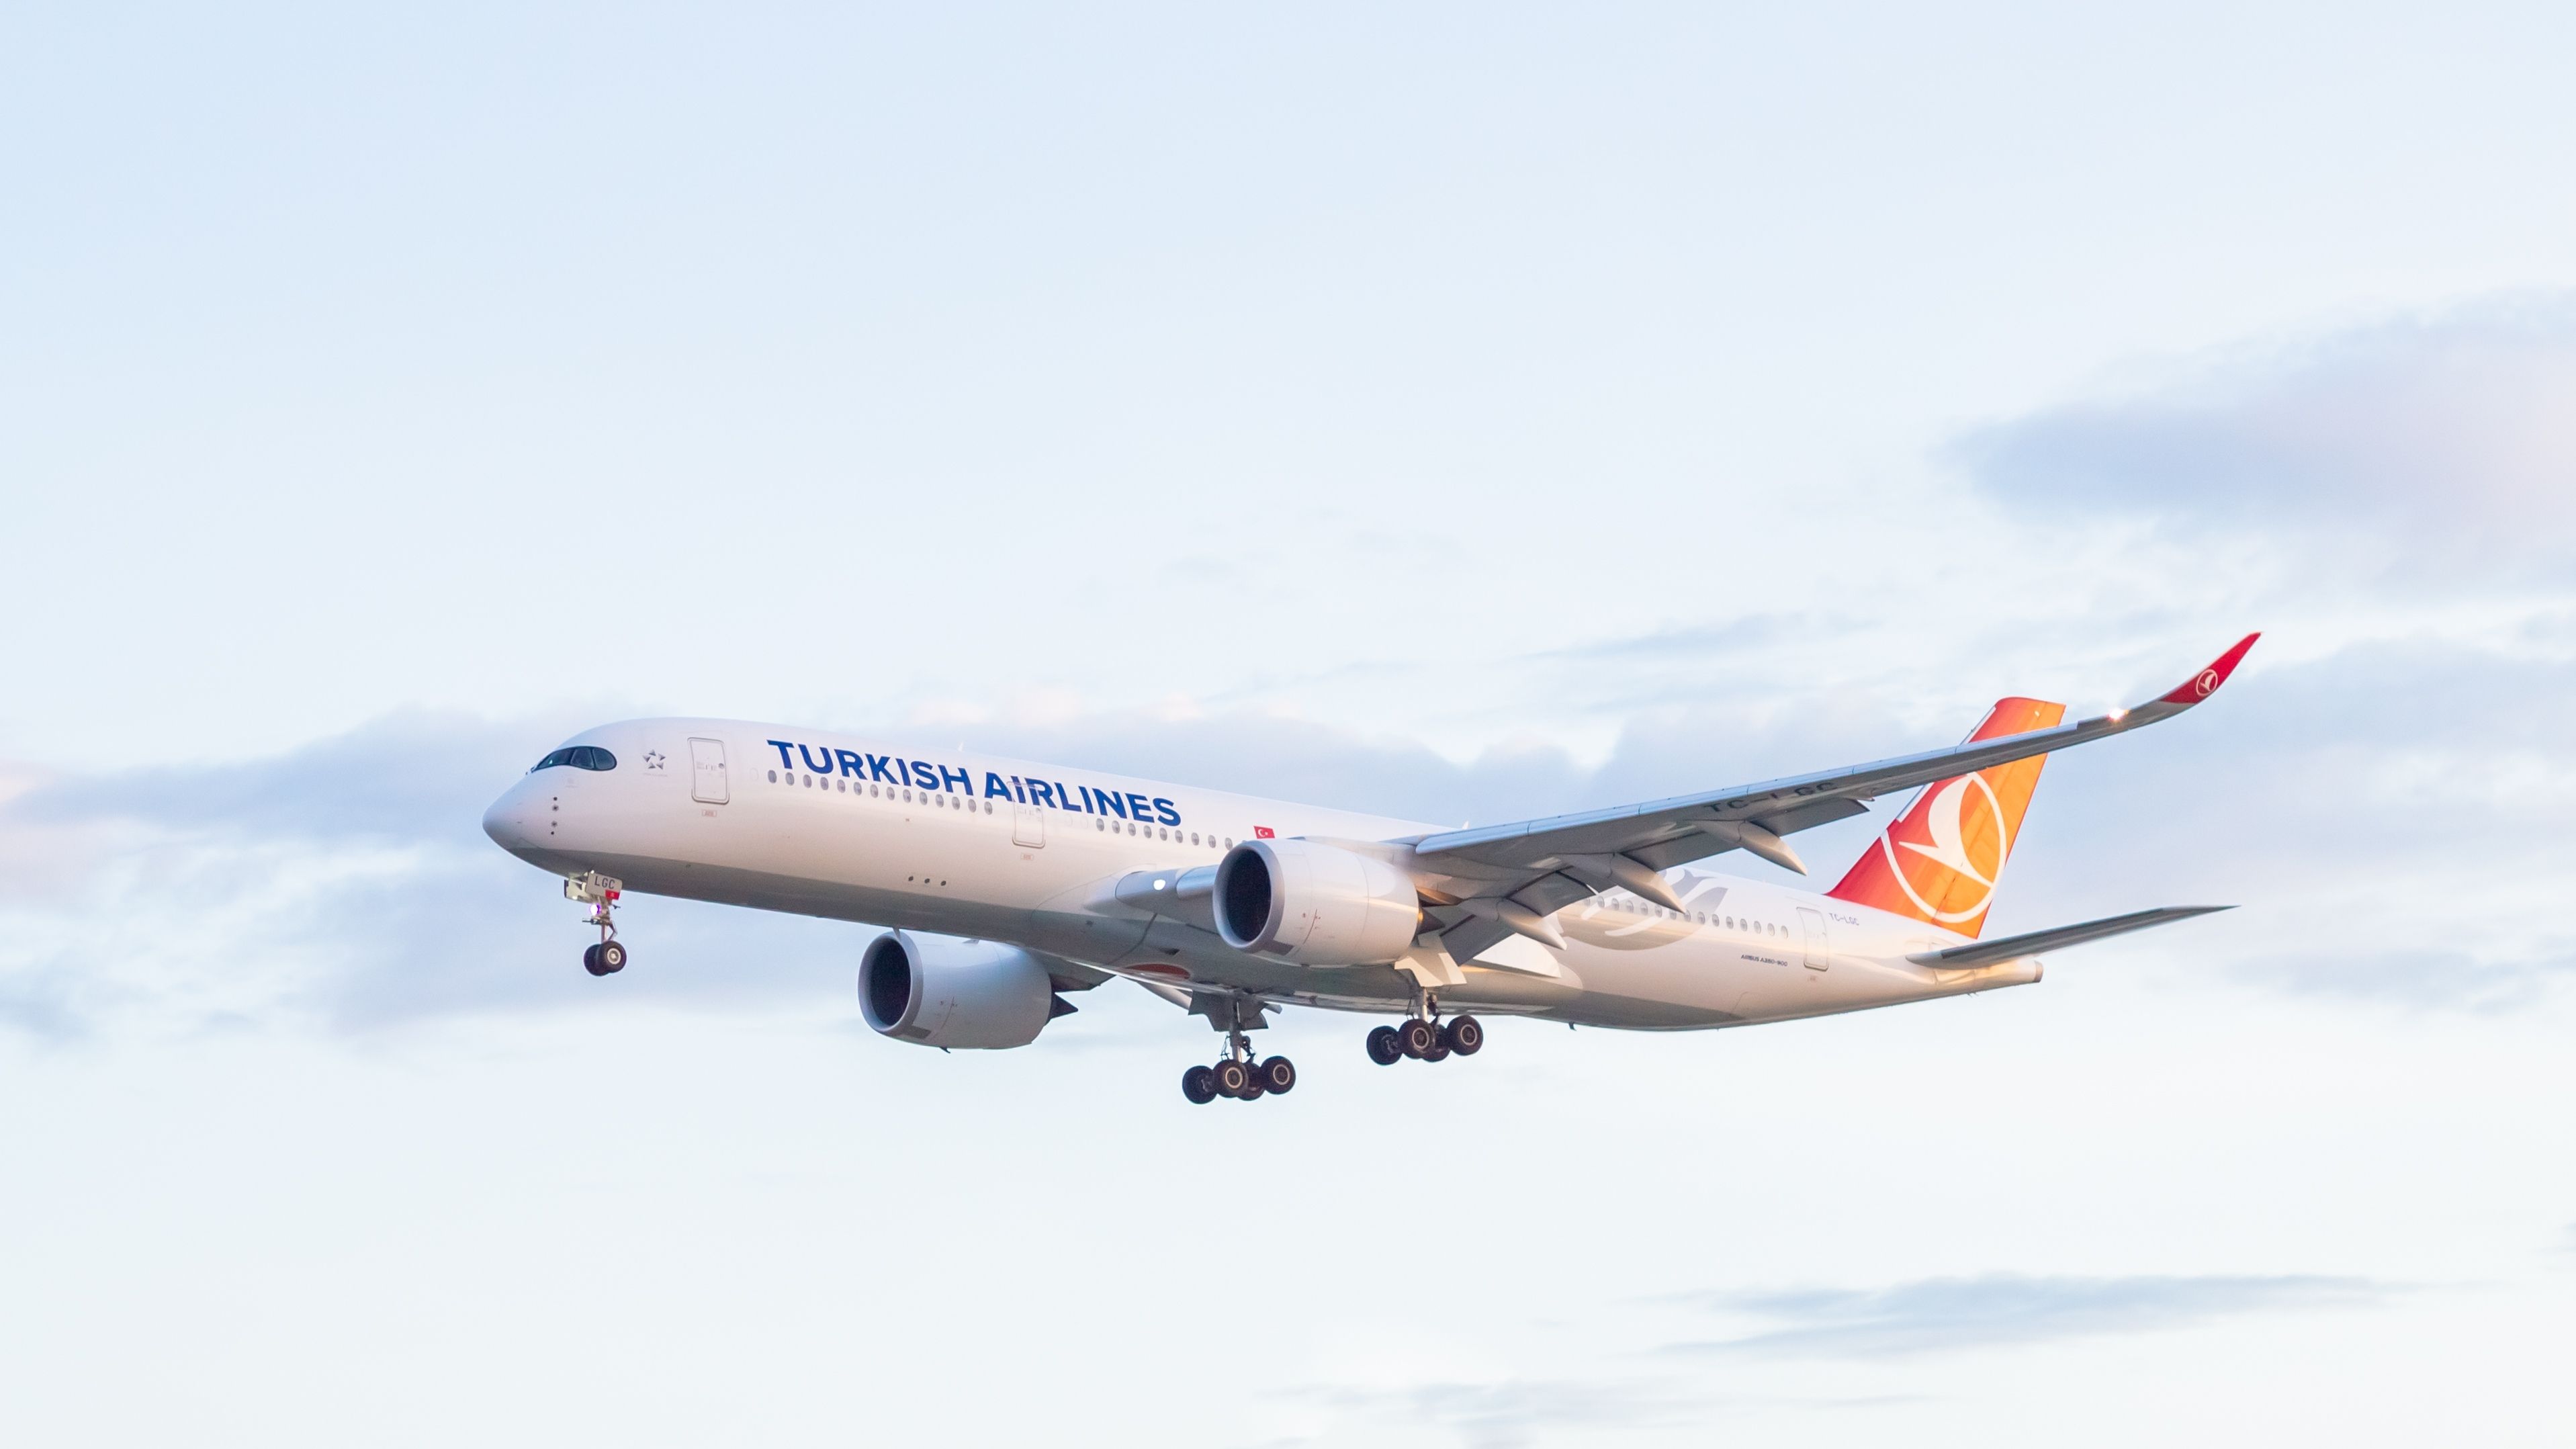 Turkish Airlines Airbus A350-900 landing at Ninoy Aquino International Airport.